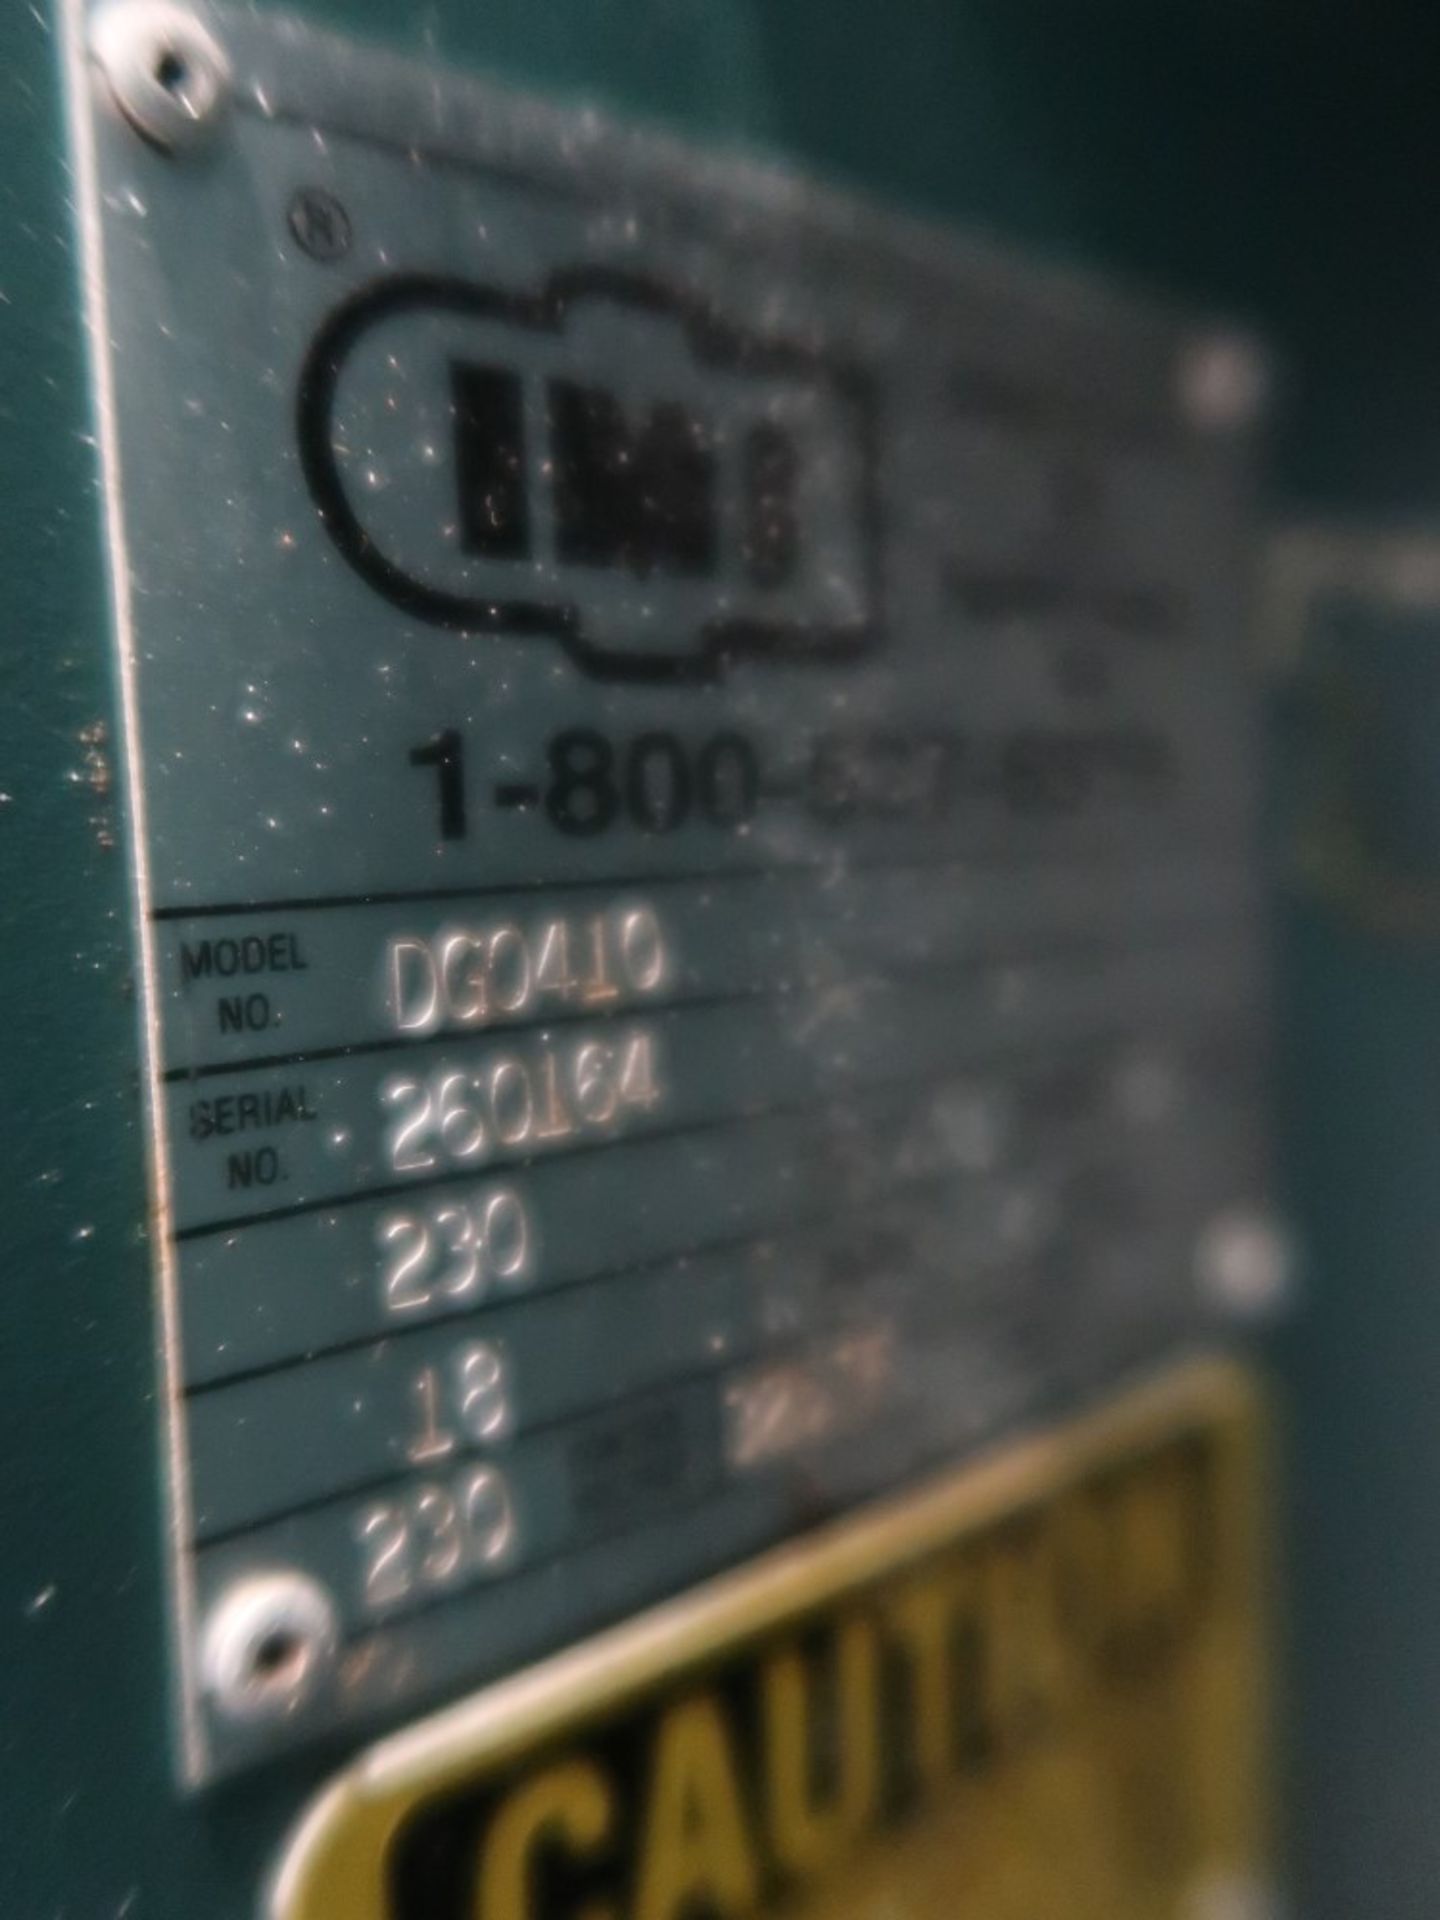 IMS Model DG-0410 2-Door Electric Oven Max Temp 325 Degrees F, 4.0 KW - Image 6 of 6